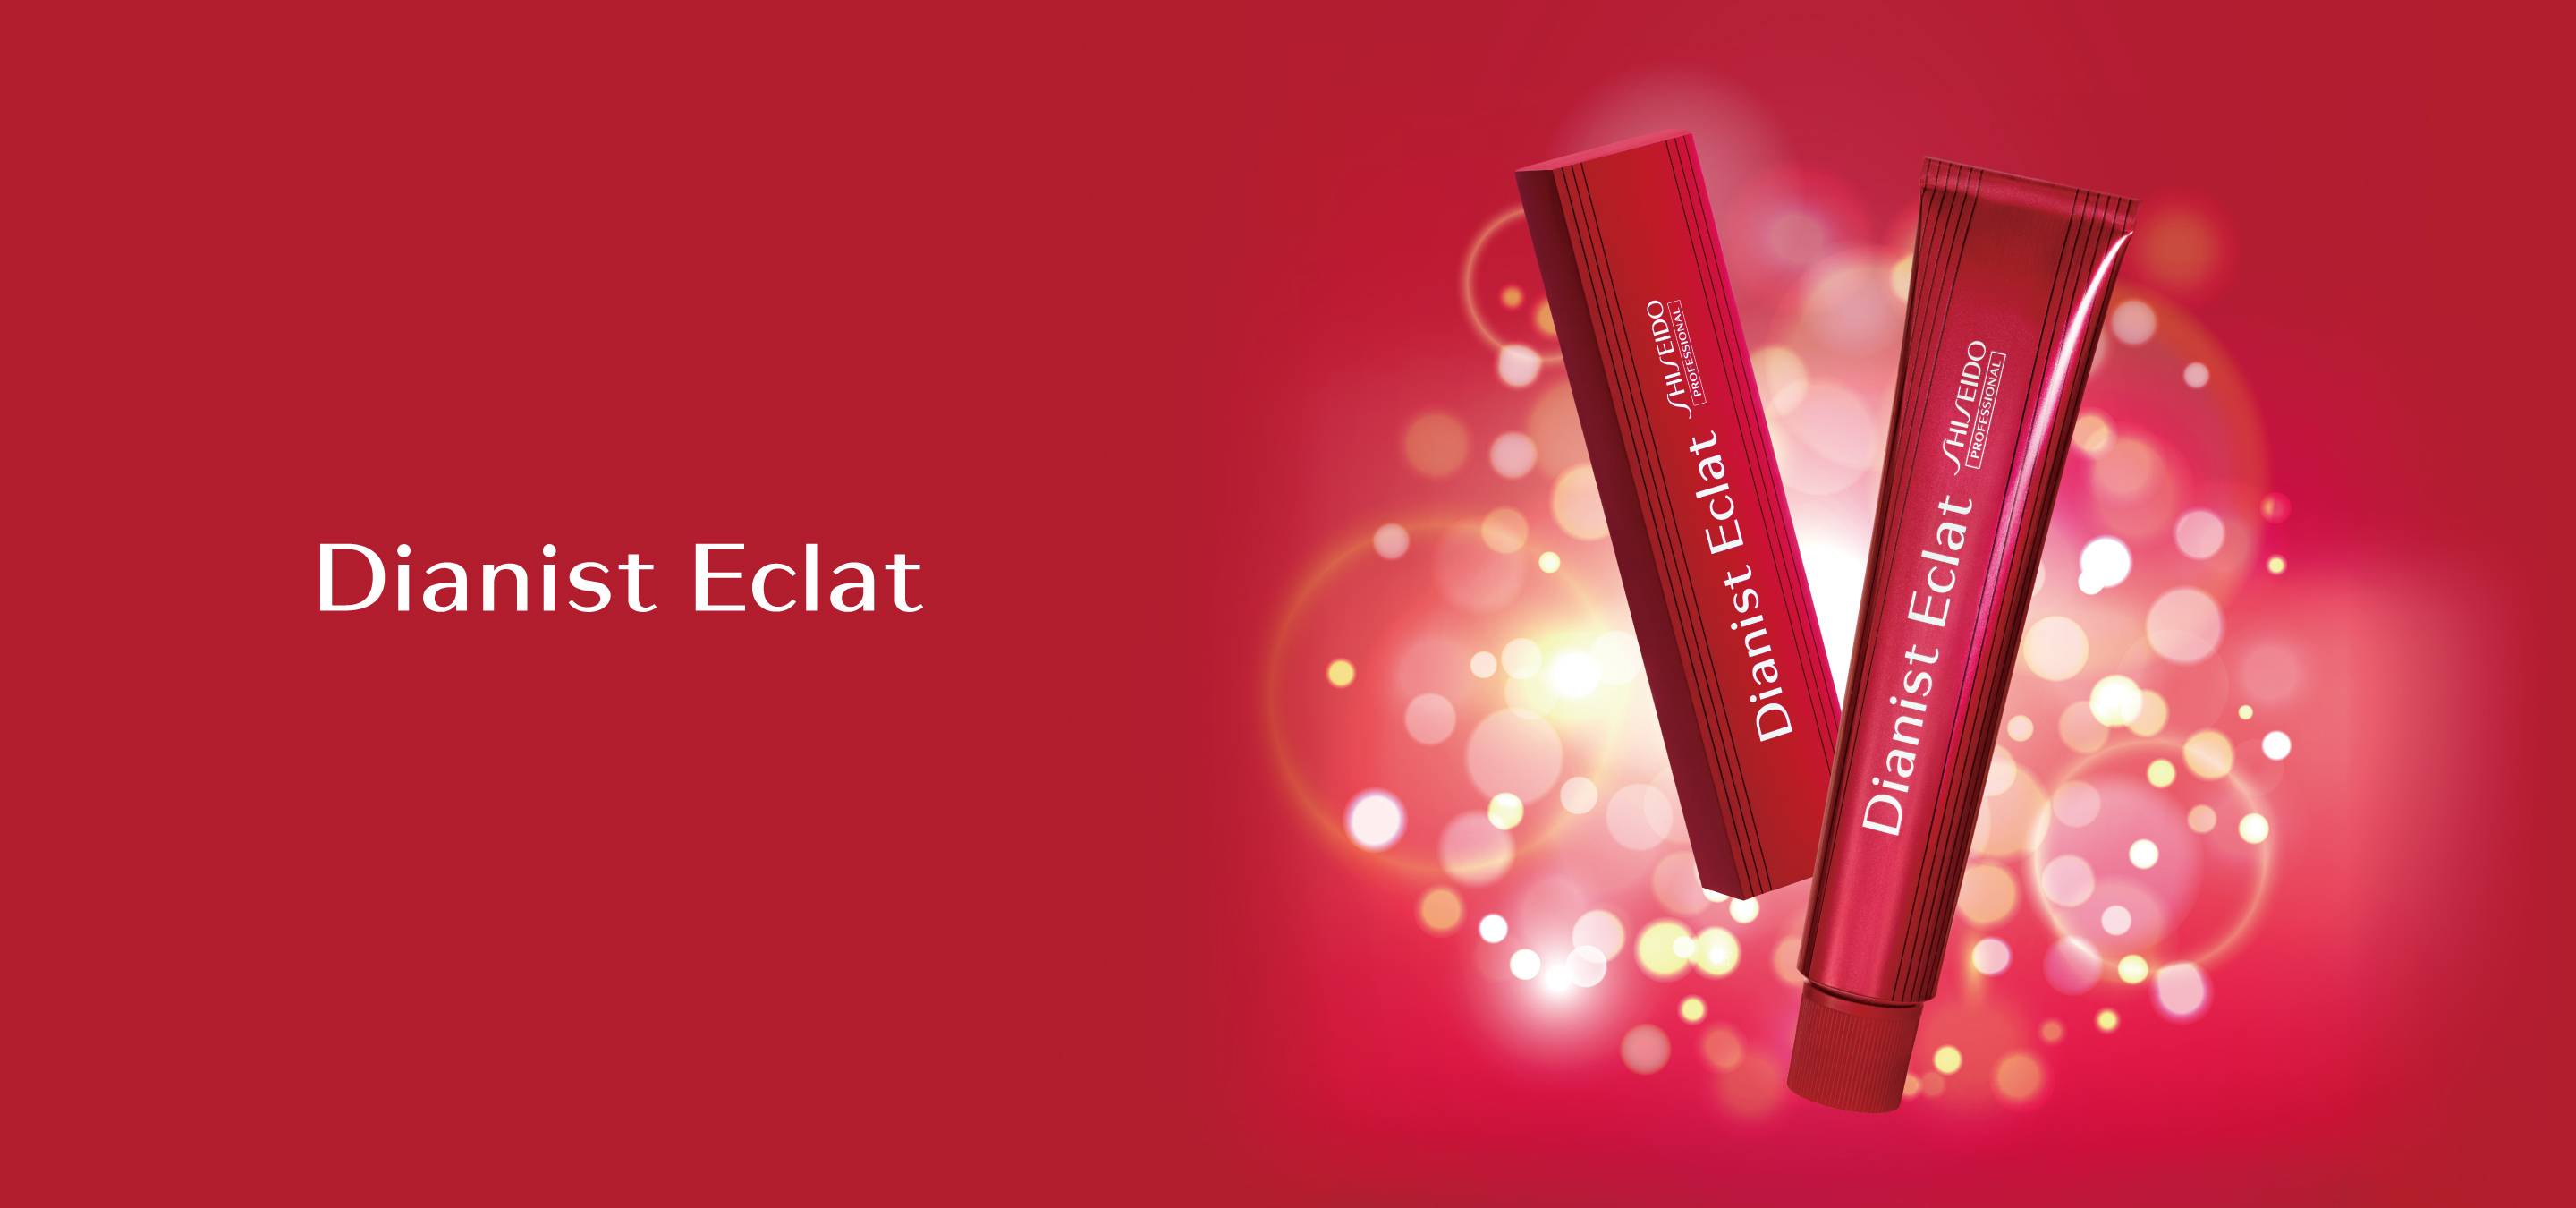 DIANIST ECLAT ディアニスト エクラ | PRODUCTS | 資生堂プロフェッショナル | Shiseido Professional